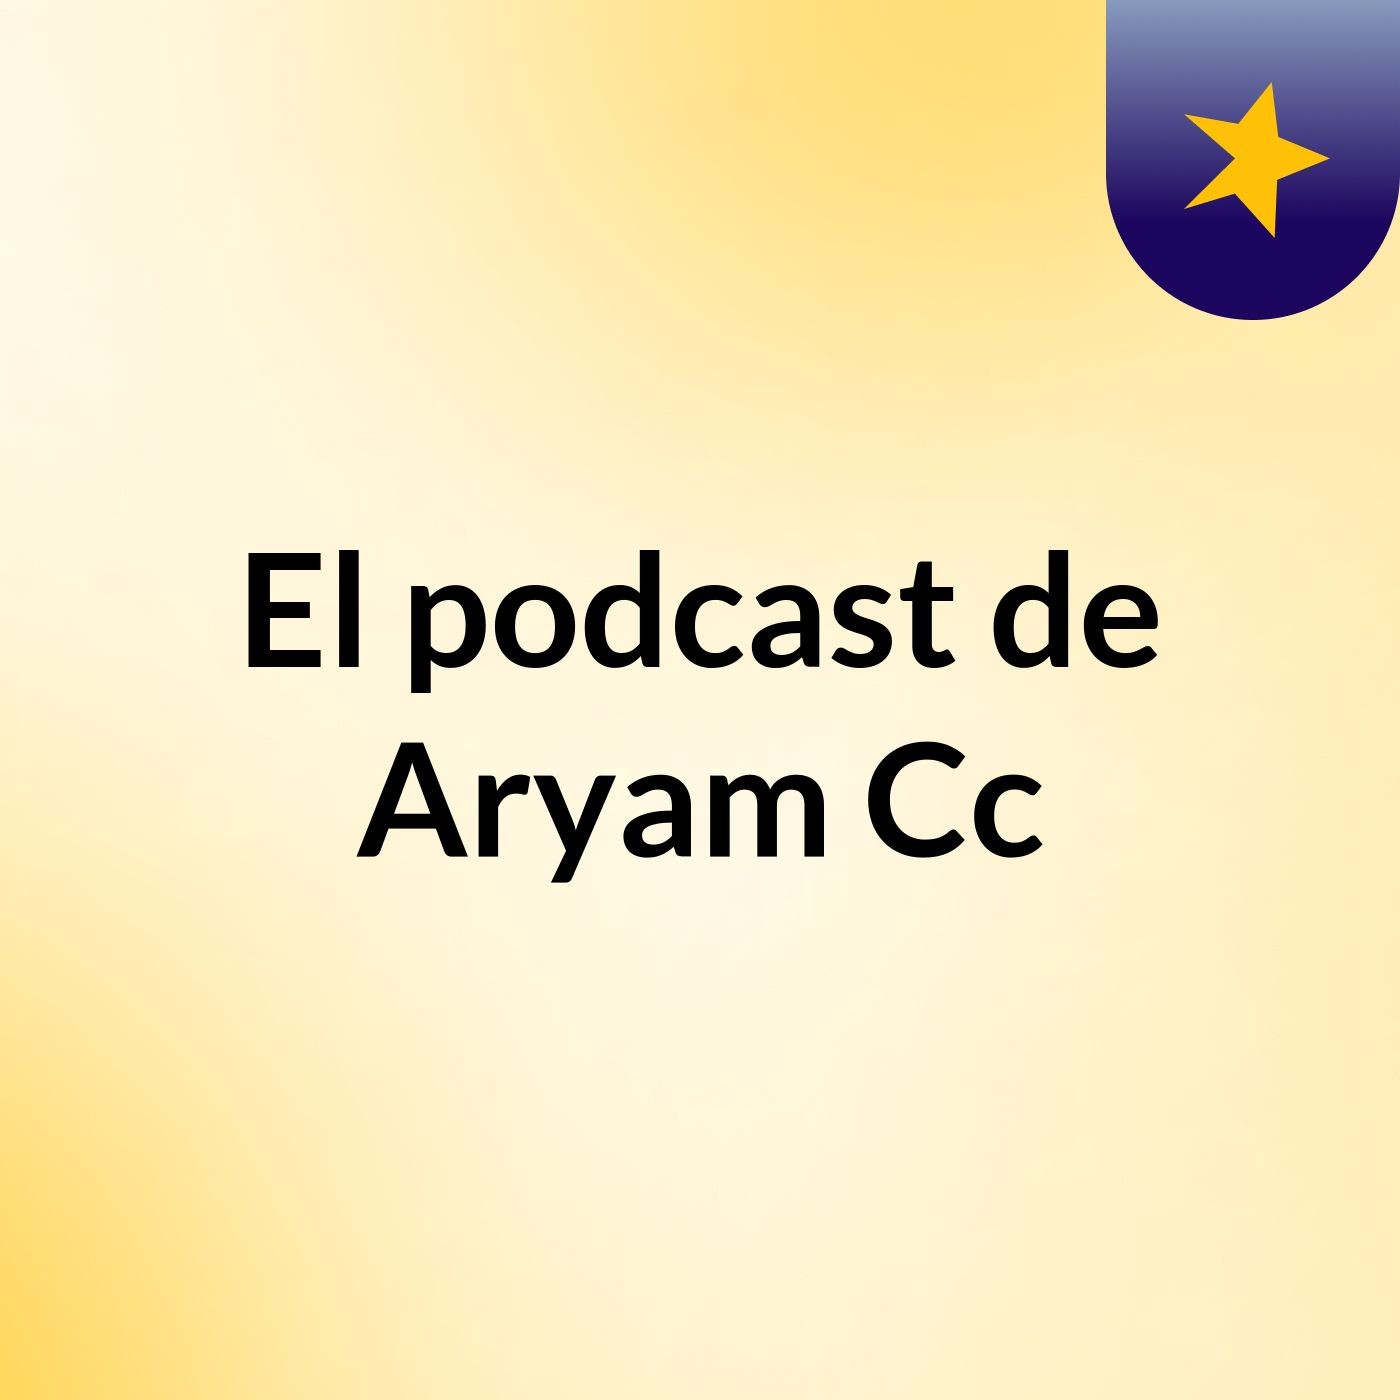 El podcast de Aryam Cc